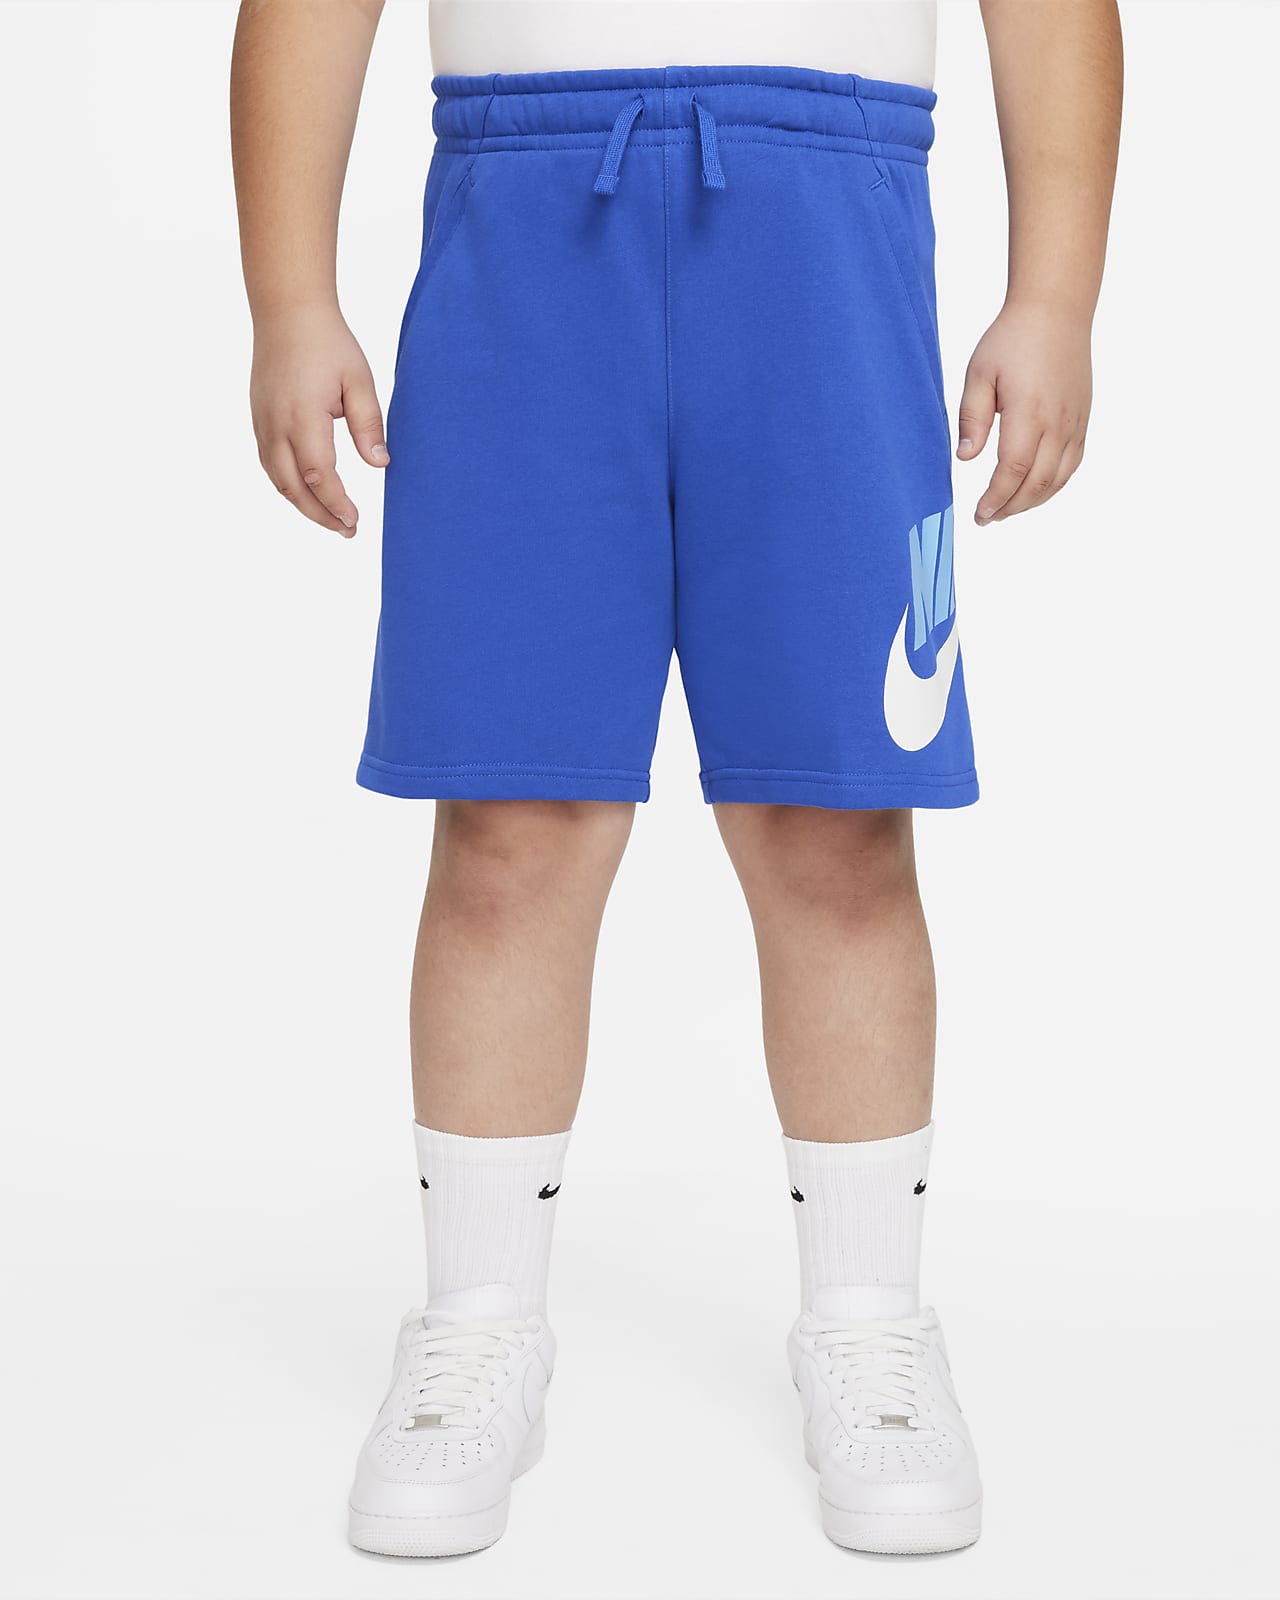 Shorts para niño talla grande Nike Sportswear Club (talla extendida)